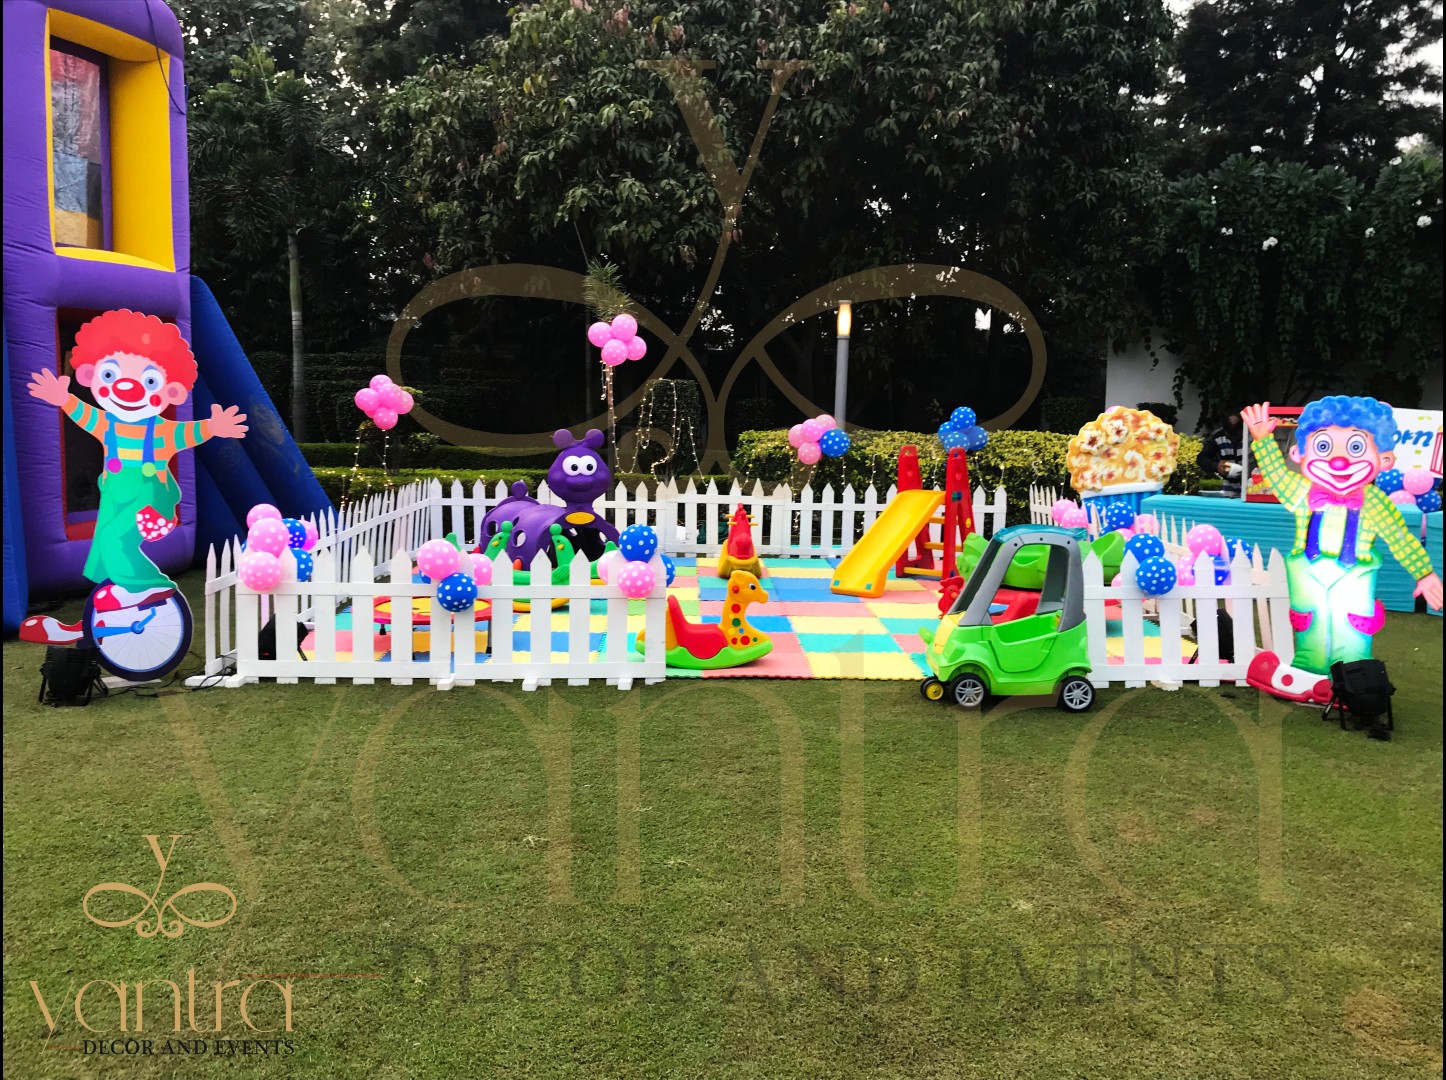 yantra-decor-events-birthday-party-play-area